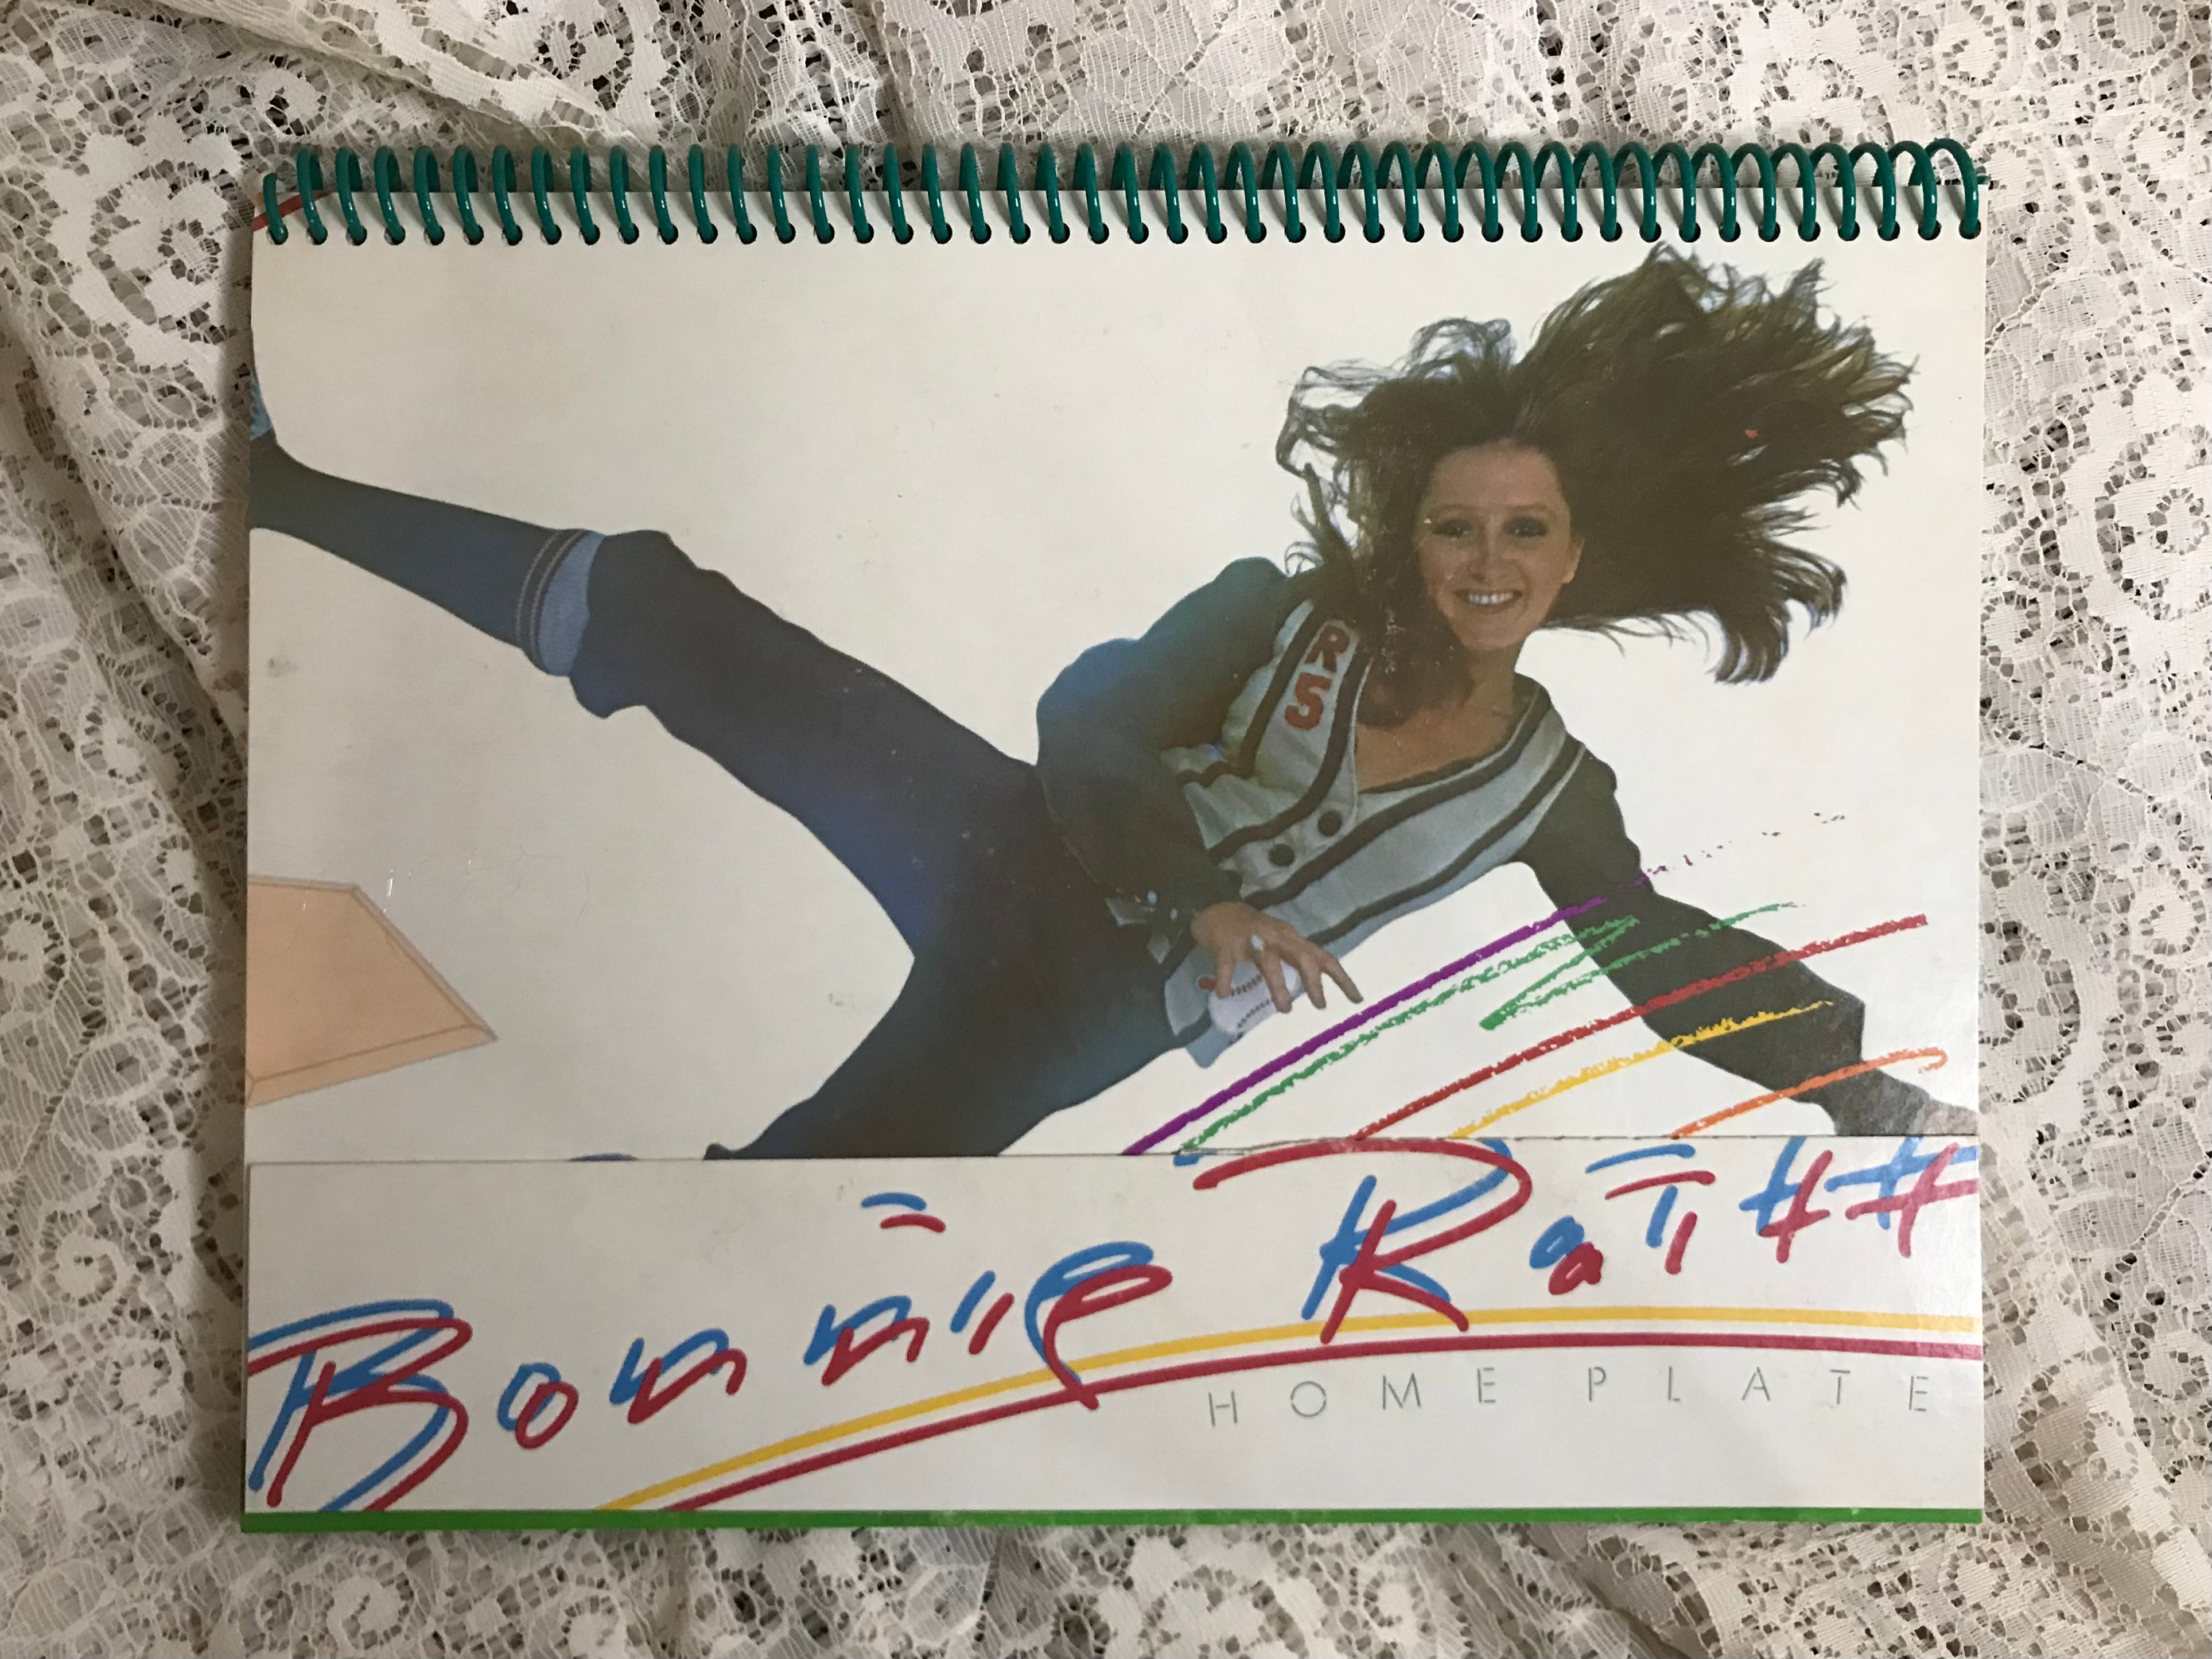 Bonnie Raitt Home Plate Album Cover Notebook